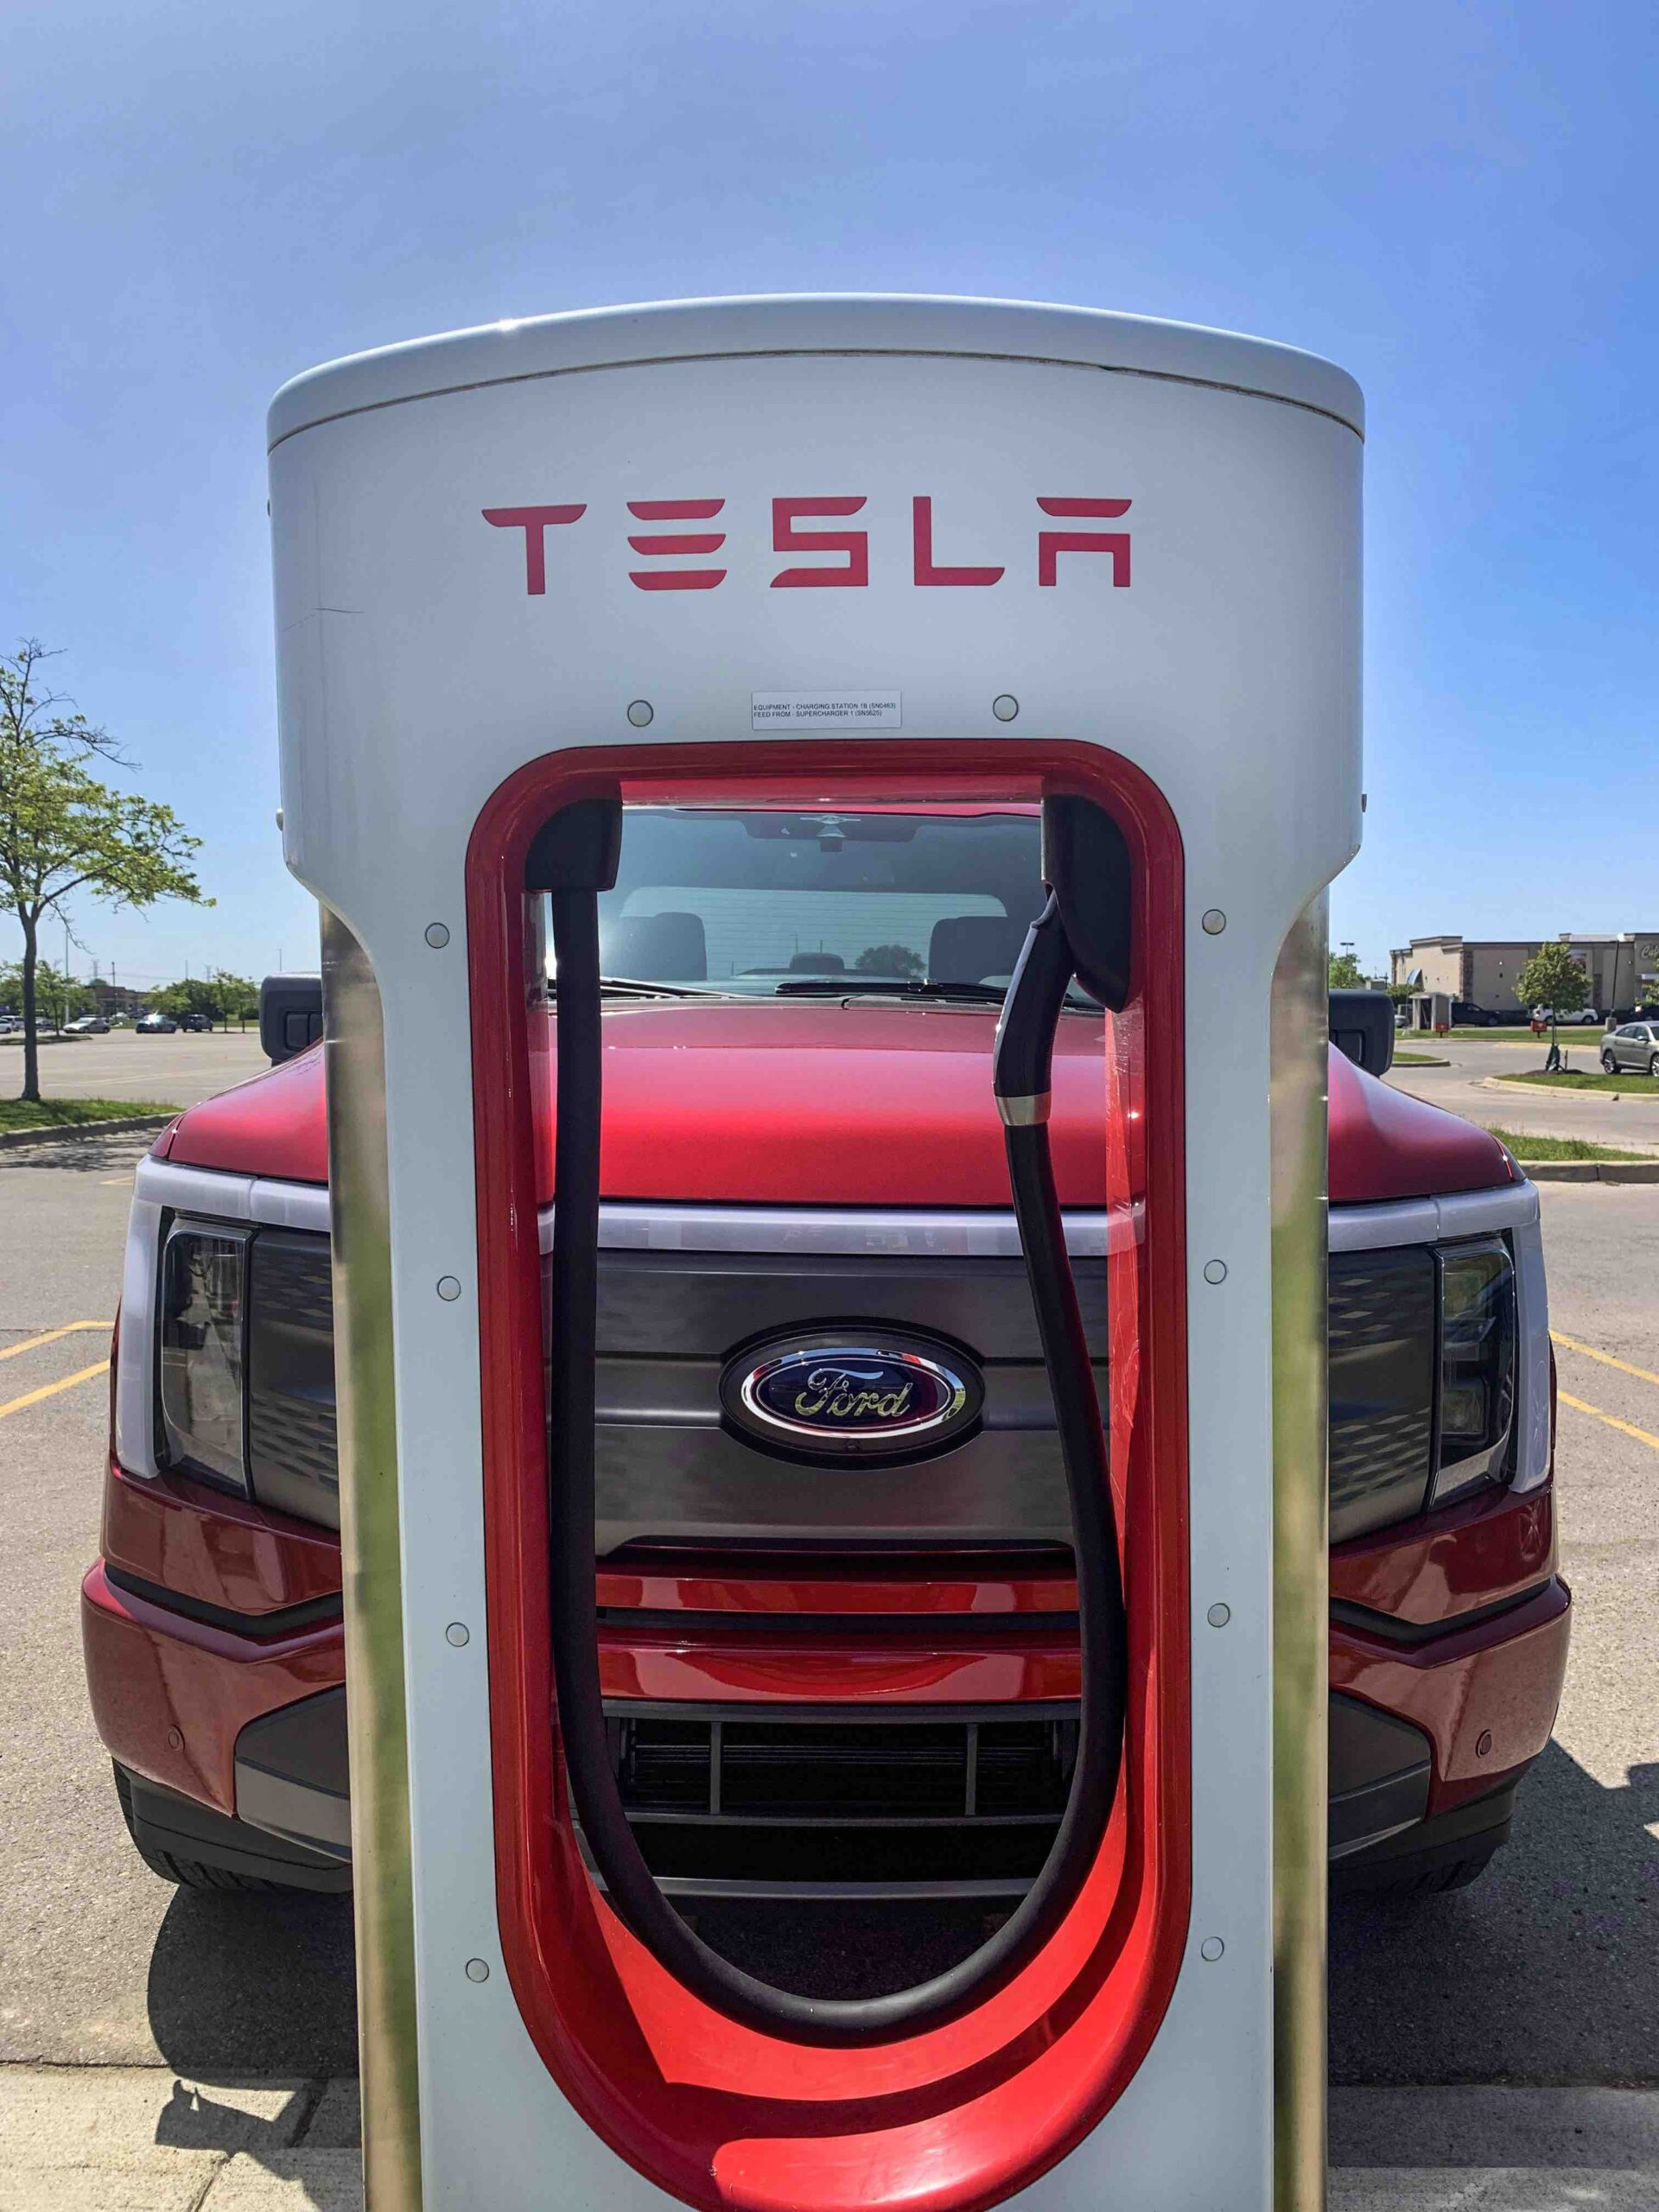 Ford Tesla Charging